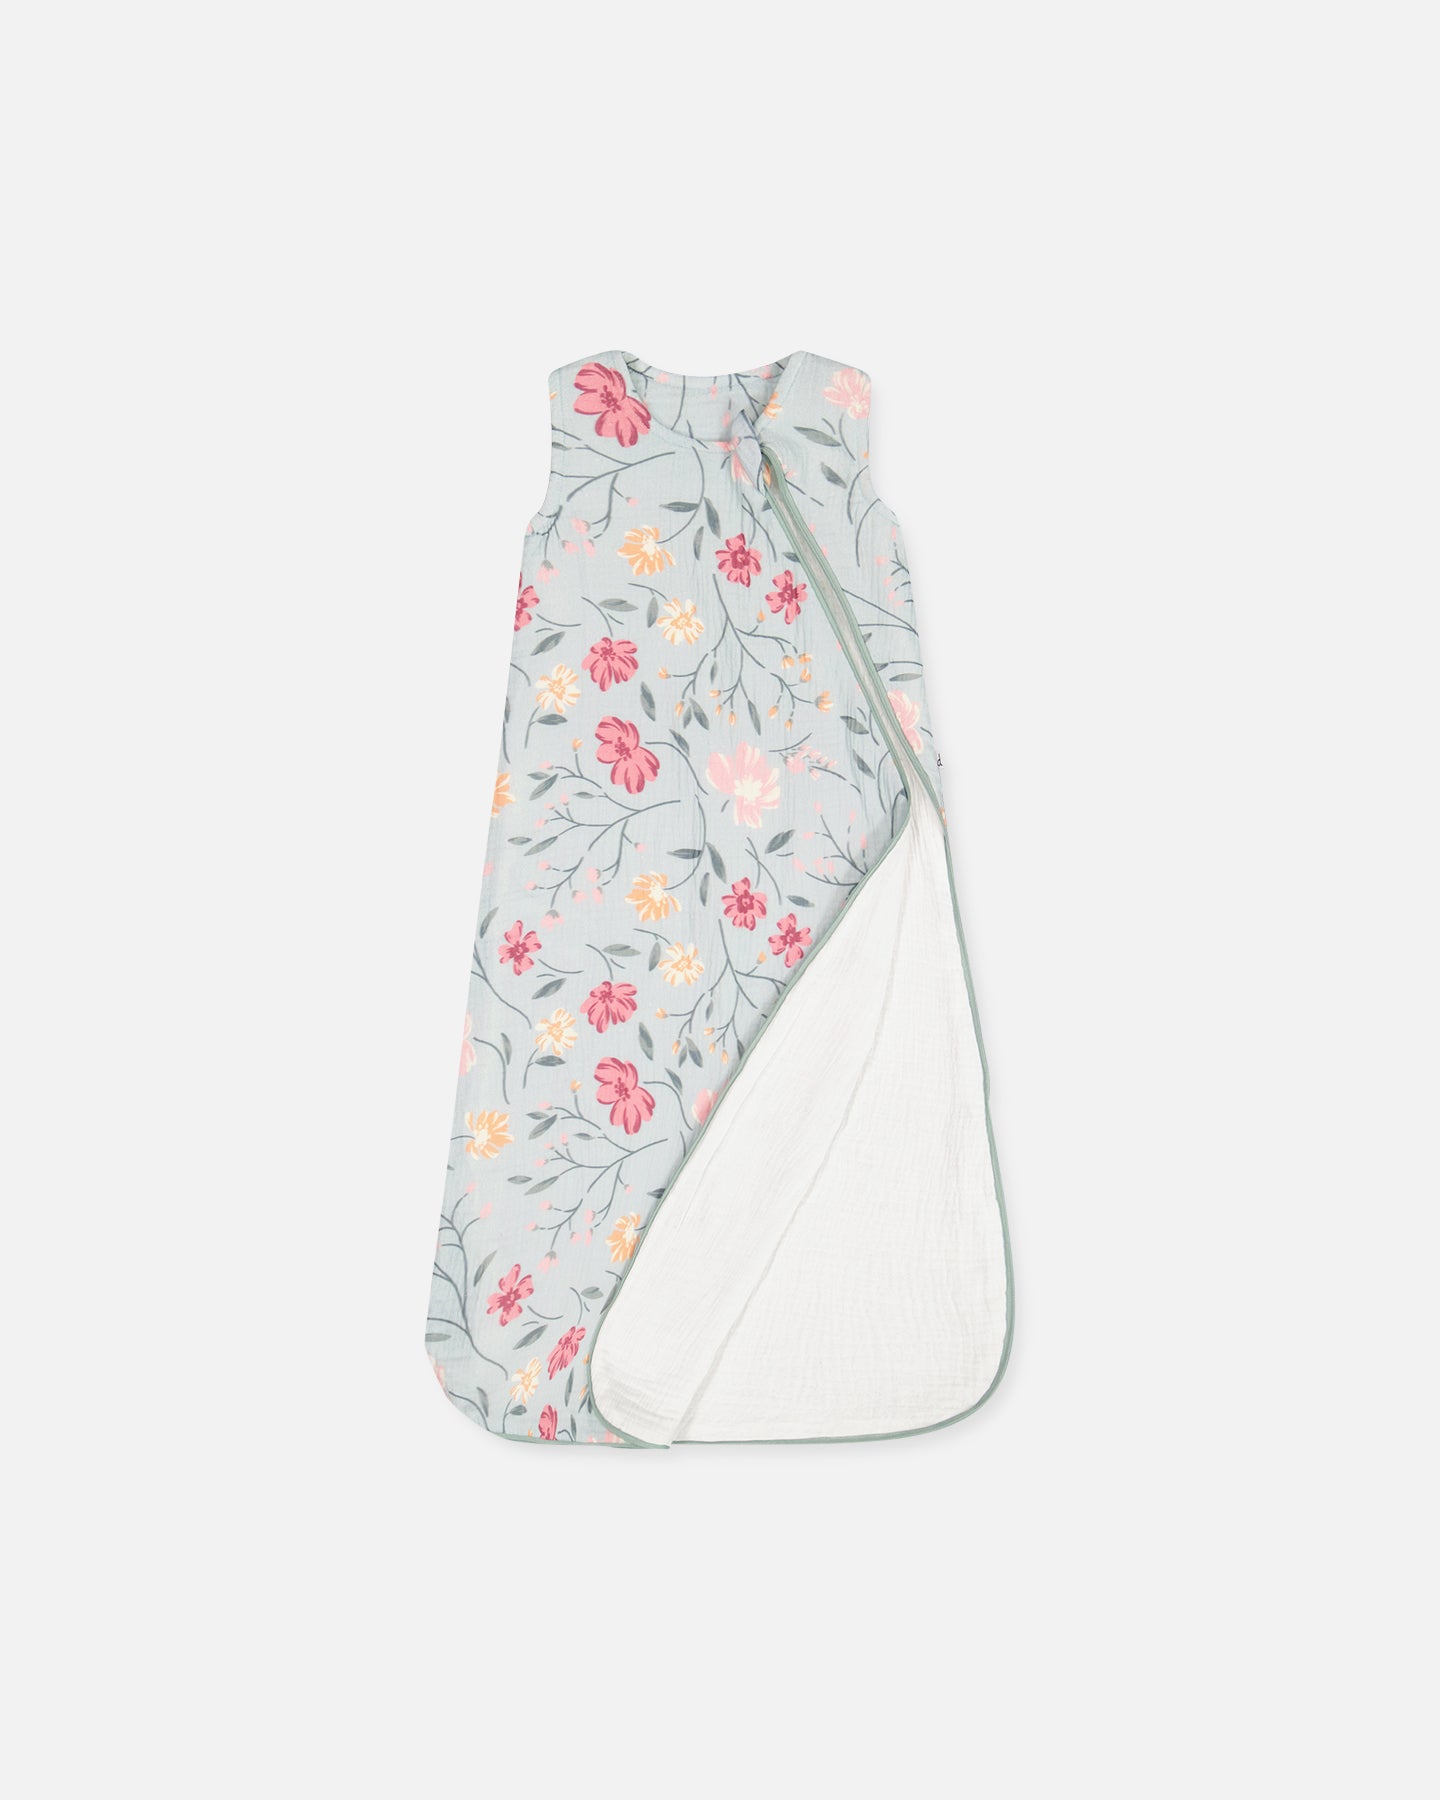 Cotton Muslin Sleep Bag Light Blue With Printed Romantic Flowers - F30BSB_073